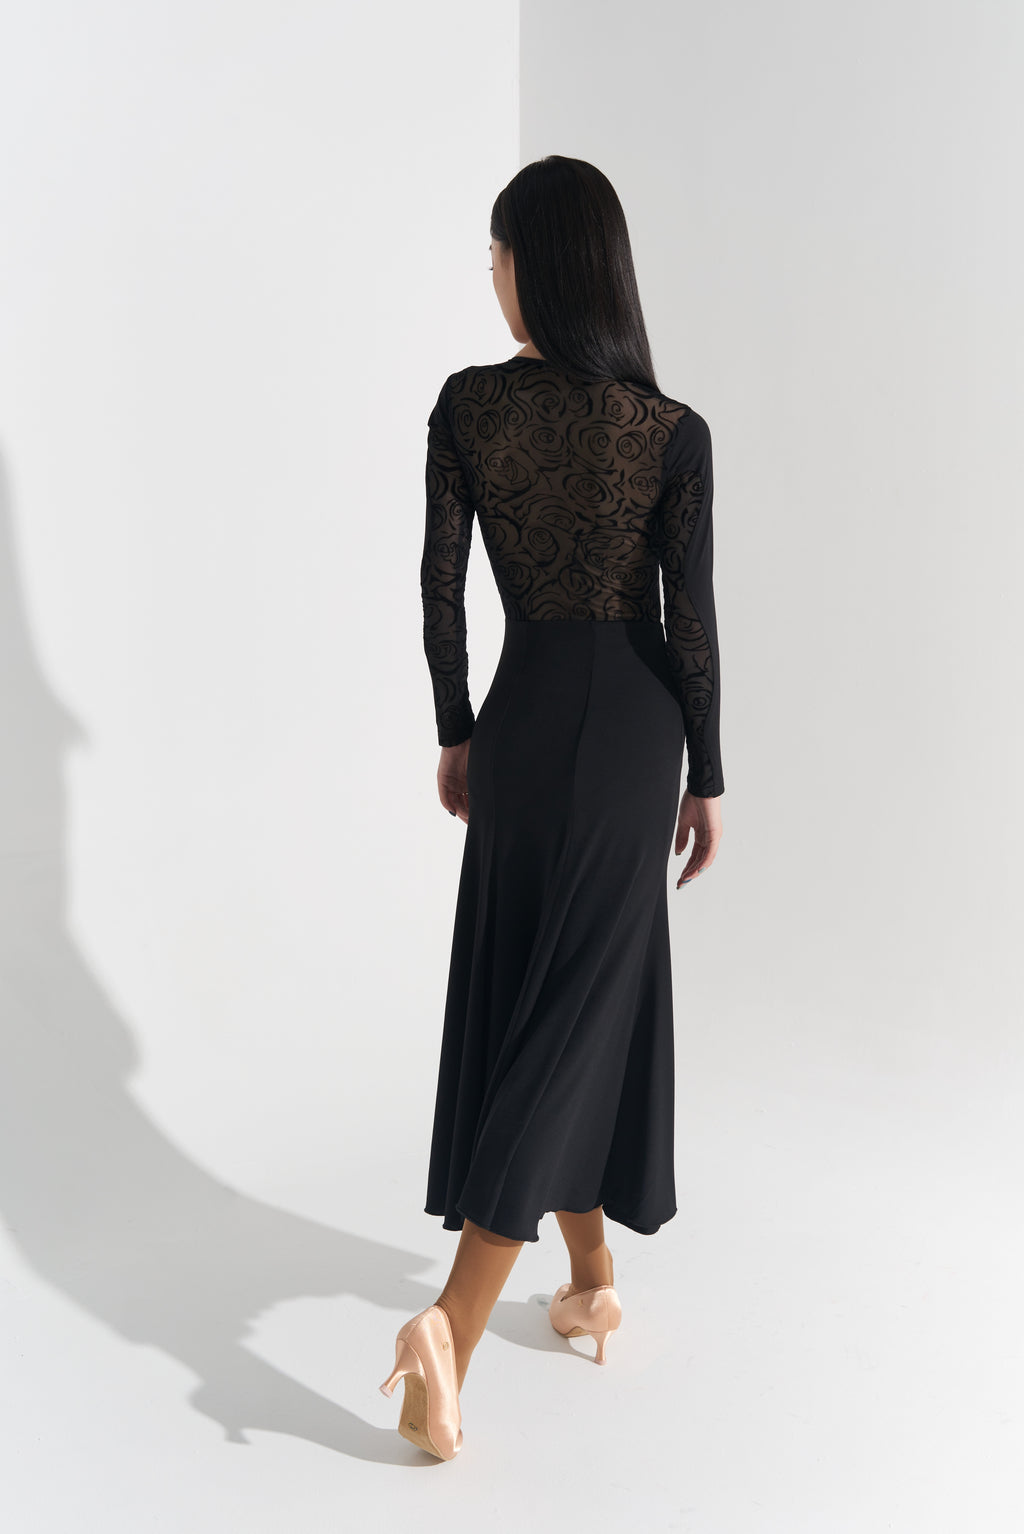 DQ-574 Black Rose Tailor-Made Modern Dress with Sheer Back